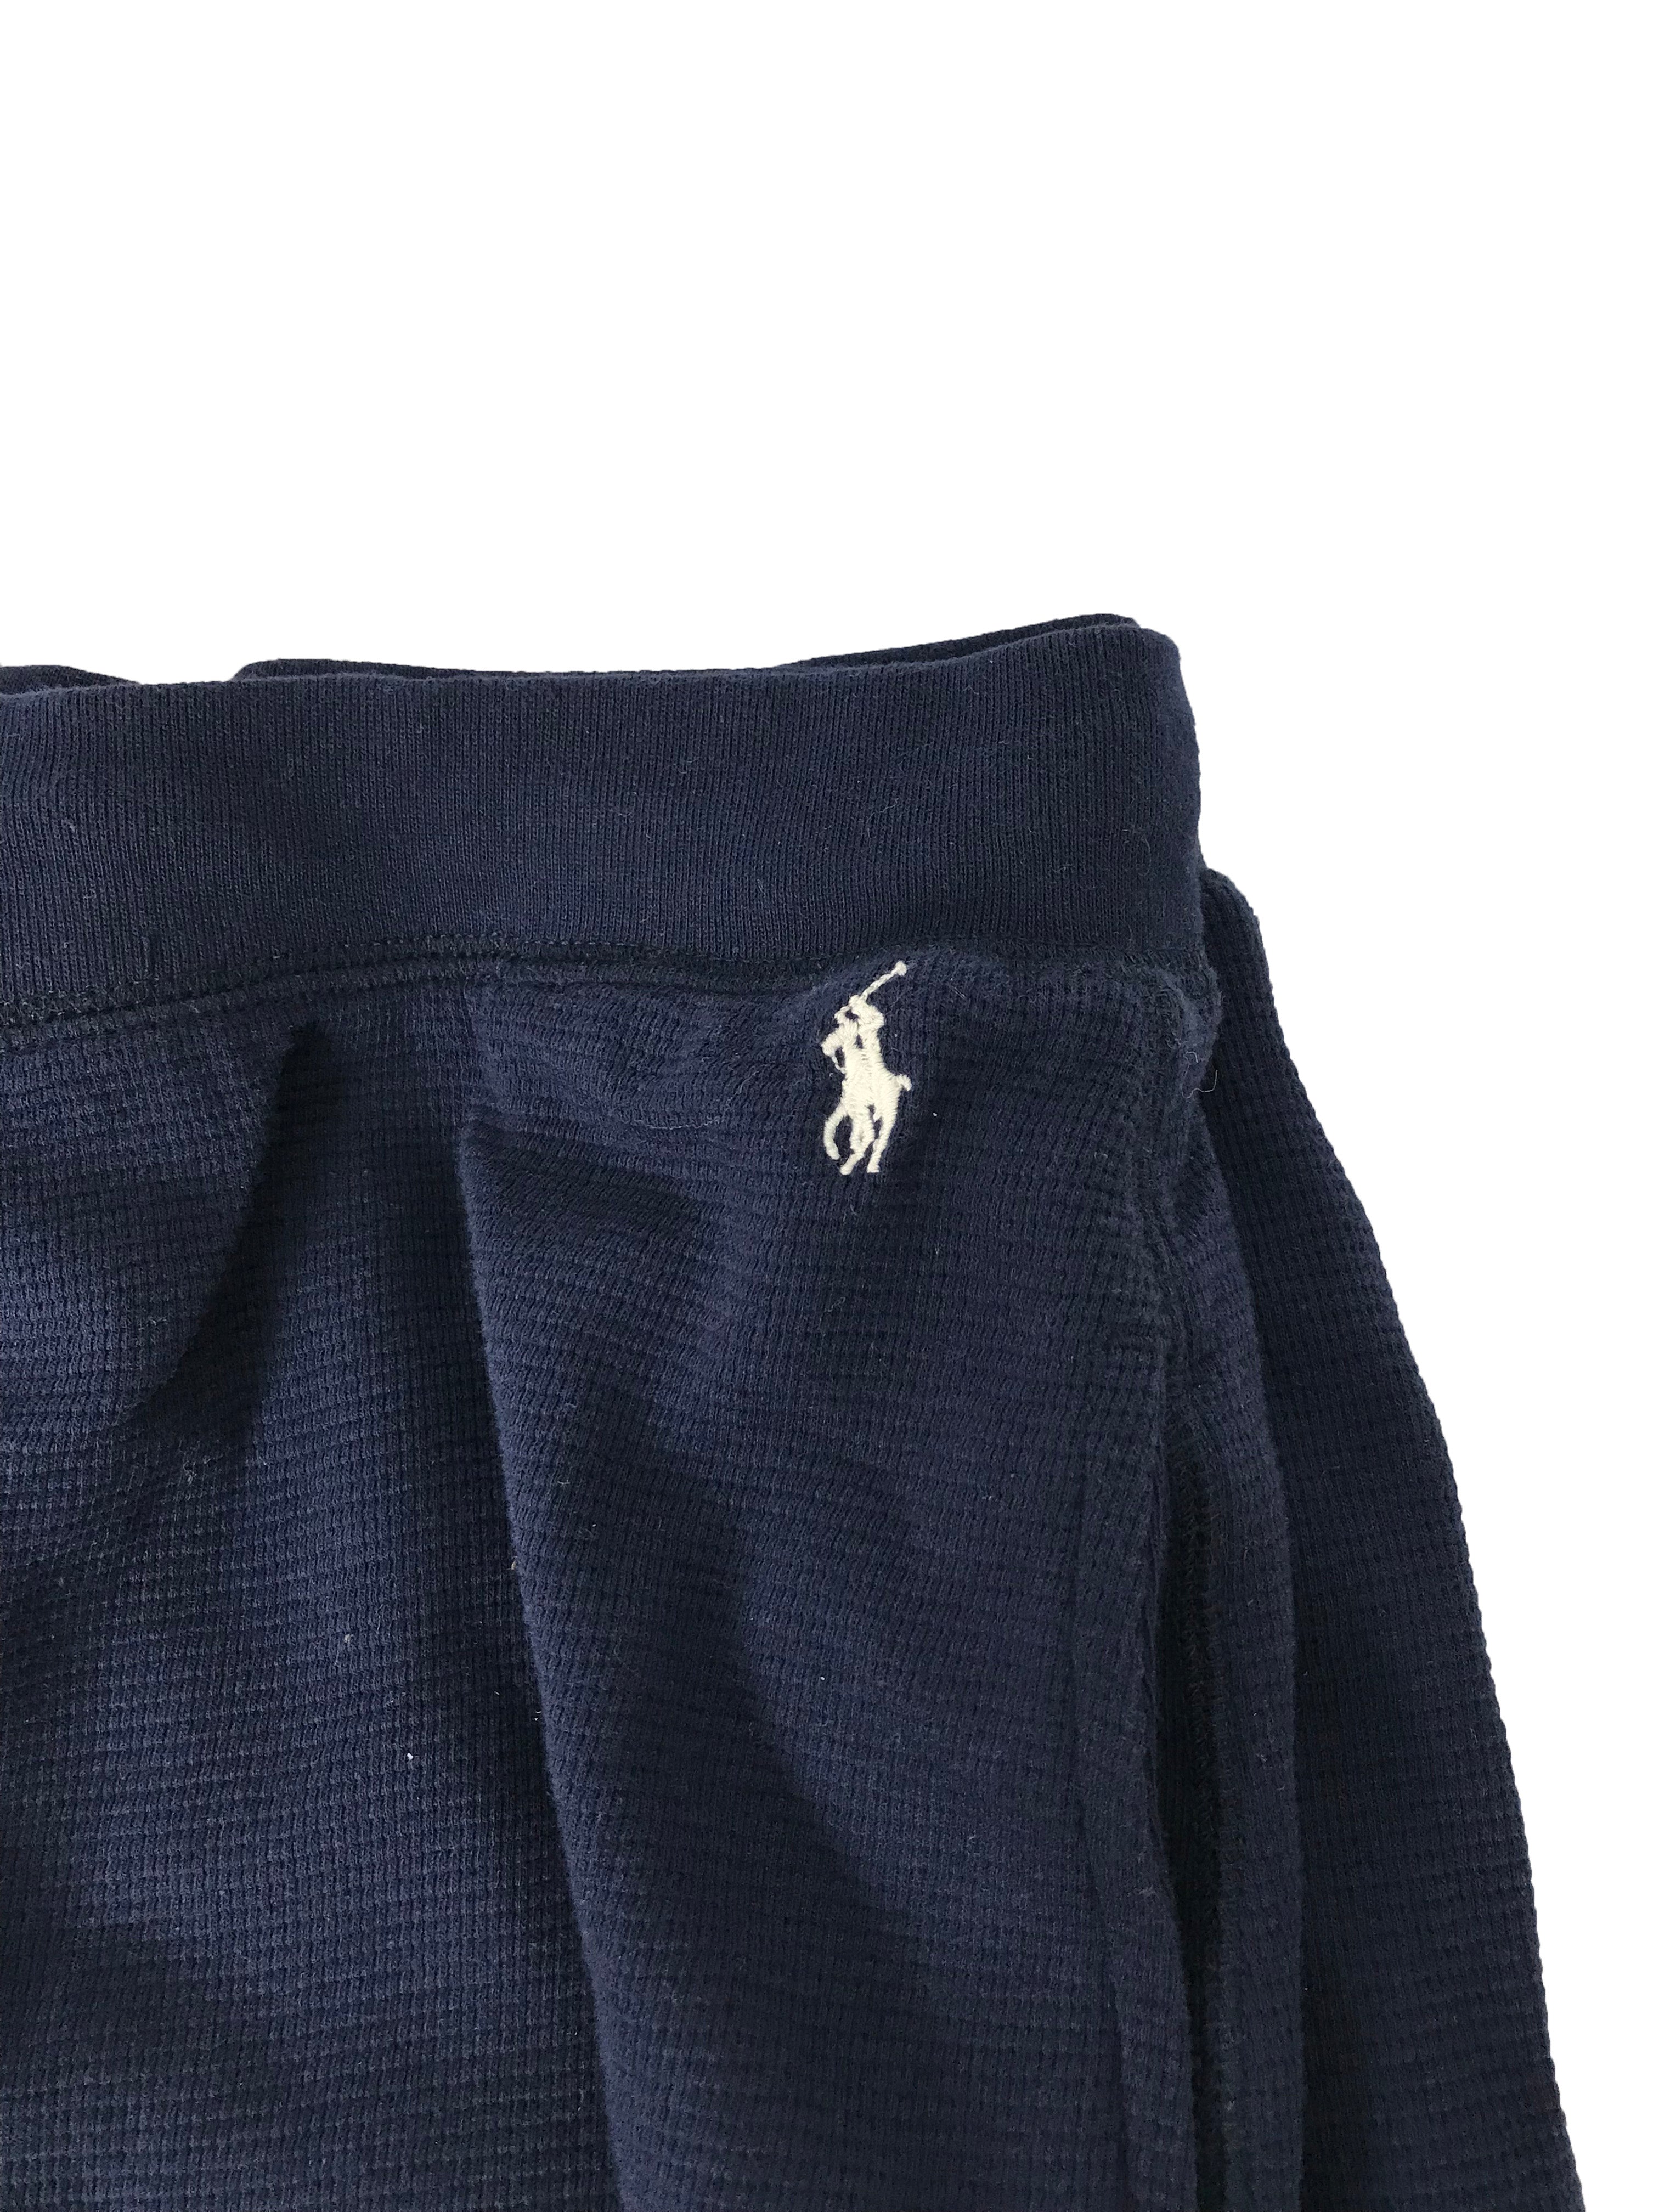 Polo by Ralph Lauren Navy Waffle Knit Sweatpants Men's Size L